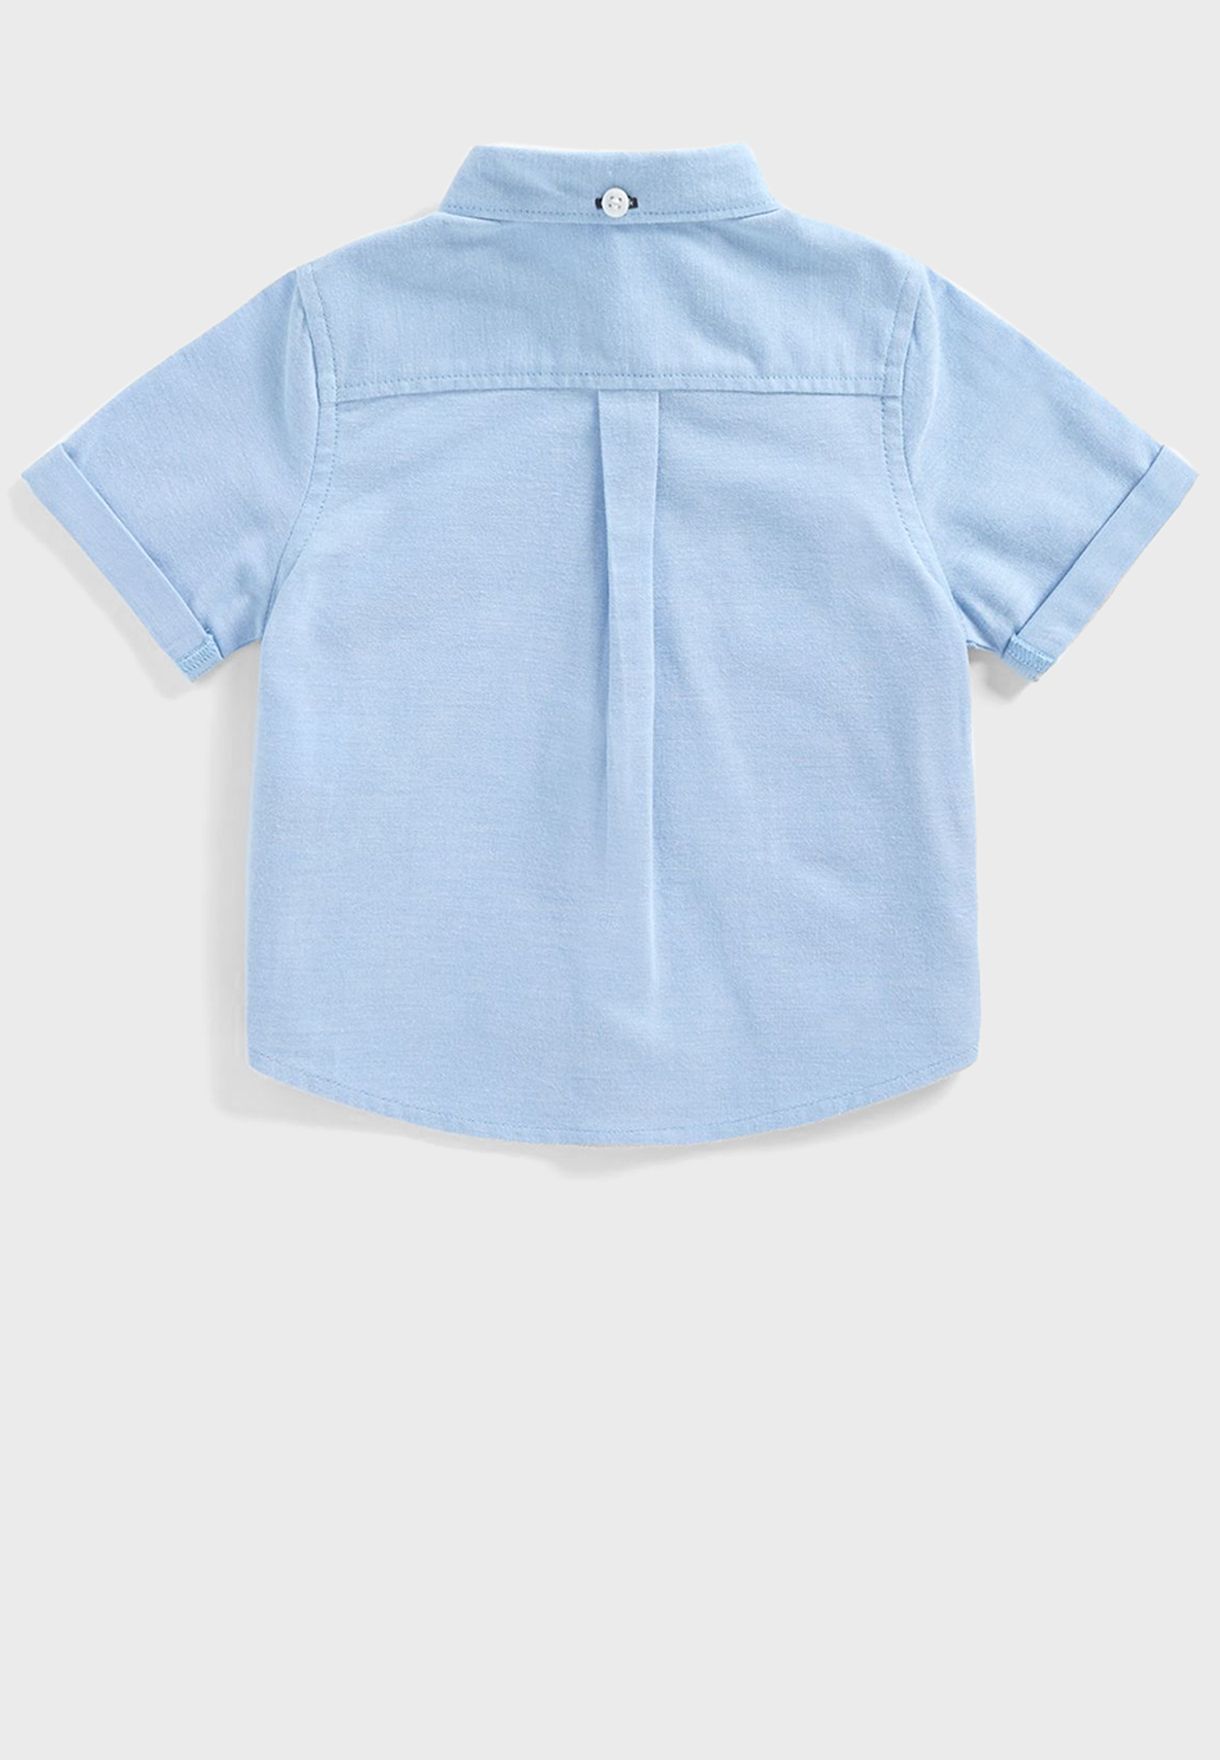 Kids Essential Shirt